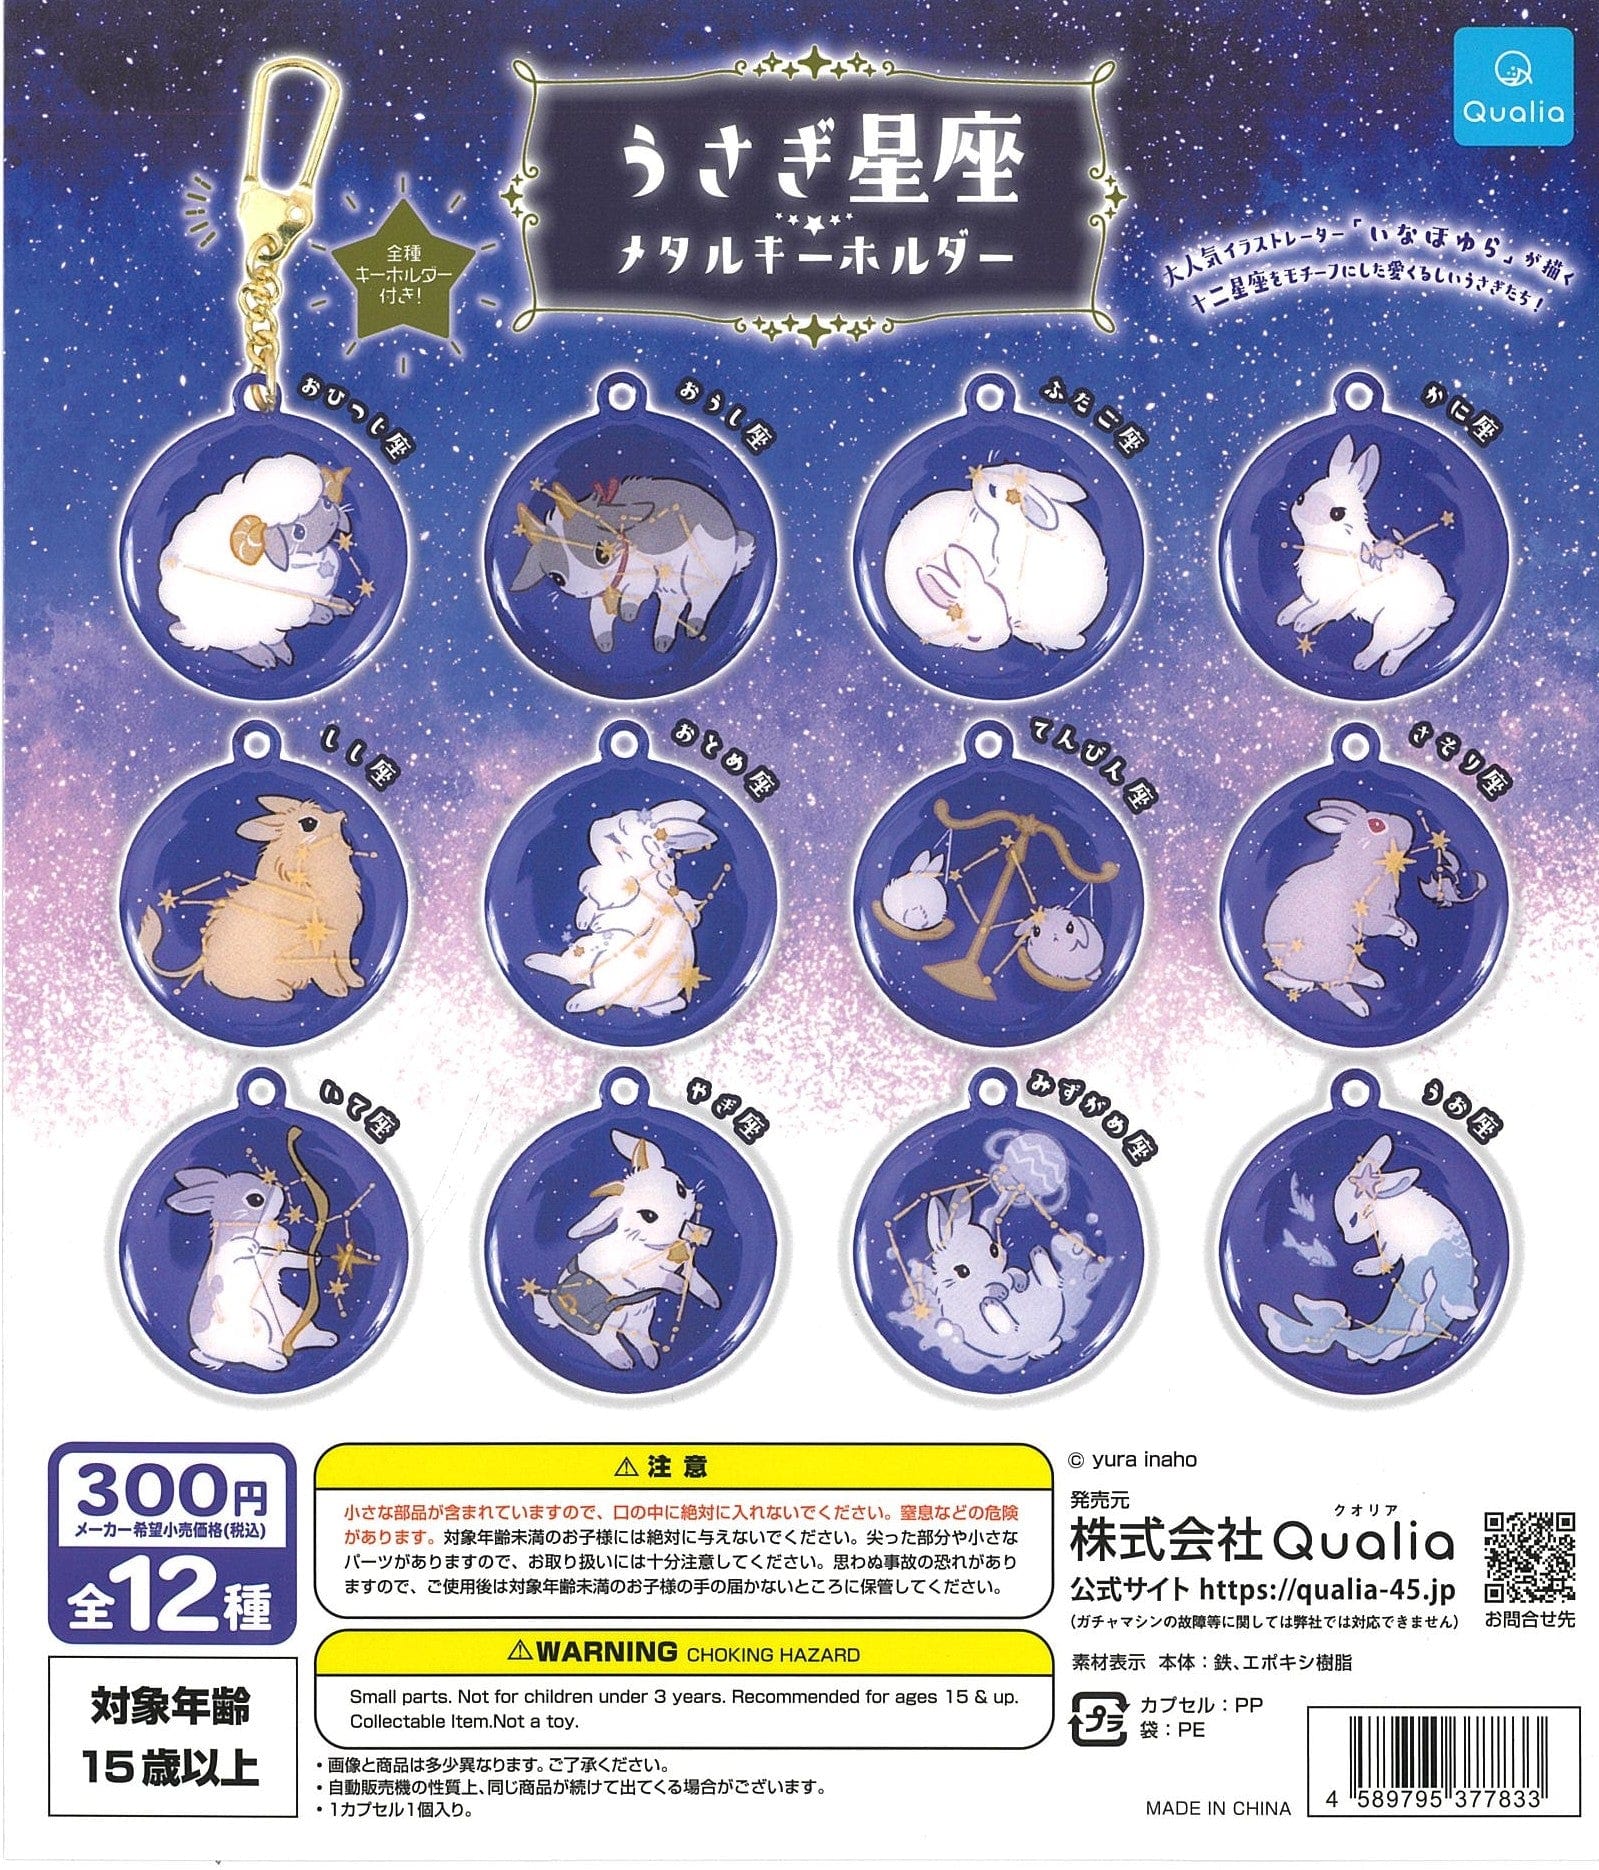 Qualia CP2459 Rabbit Zodiac Sign Metal Key Chain